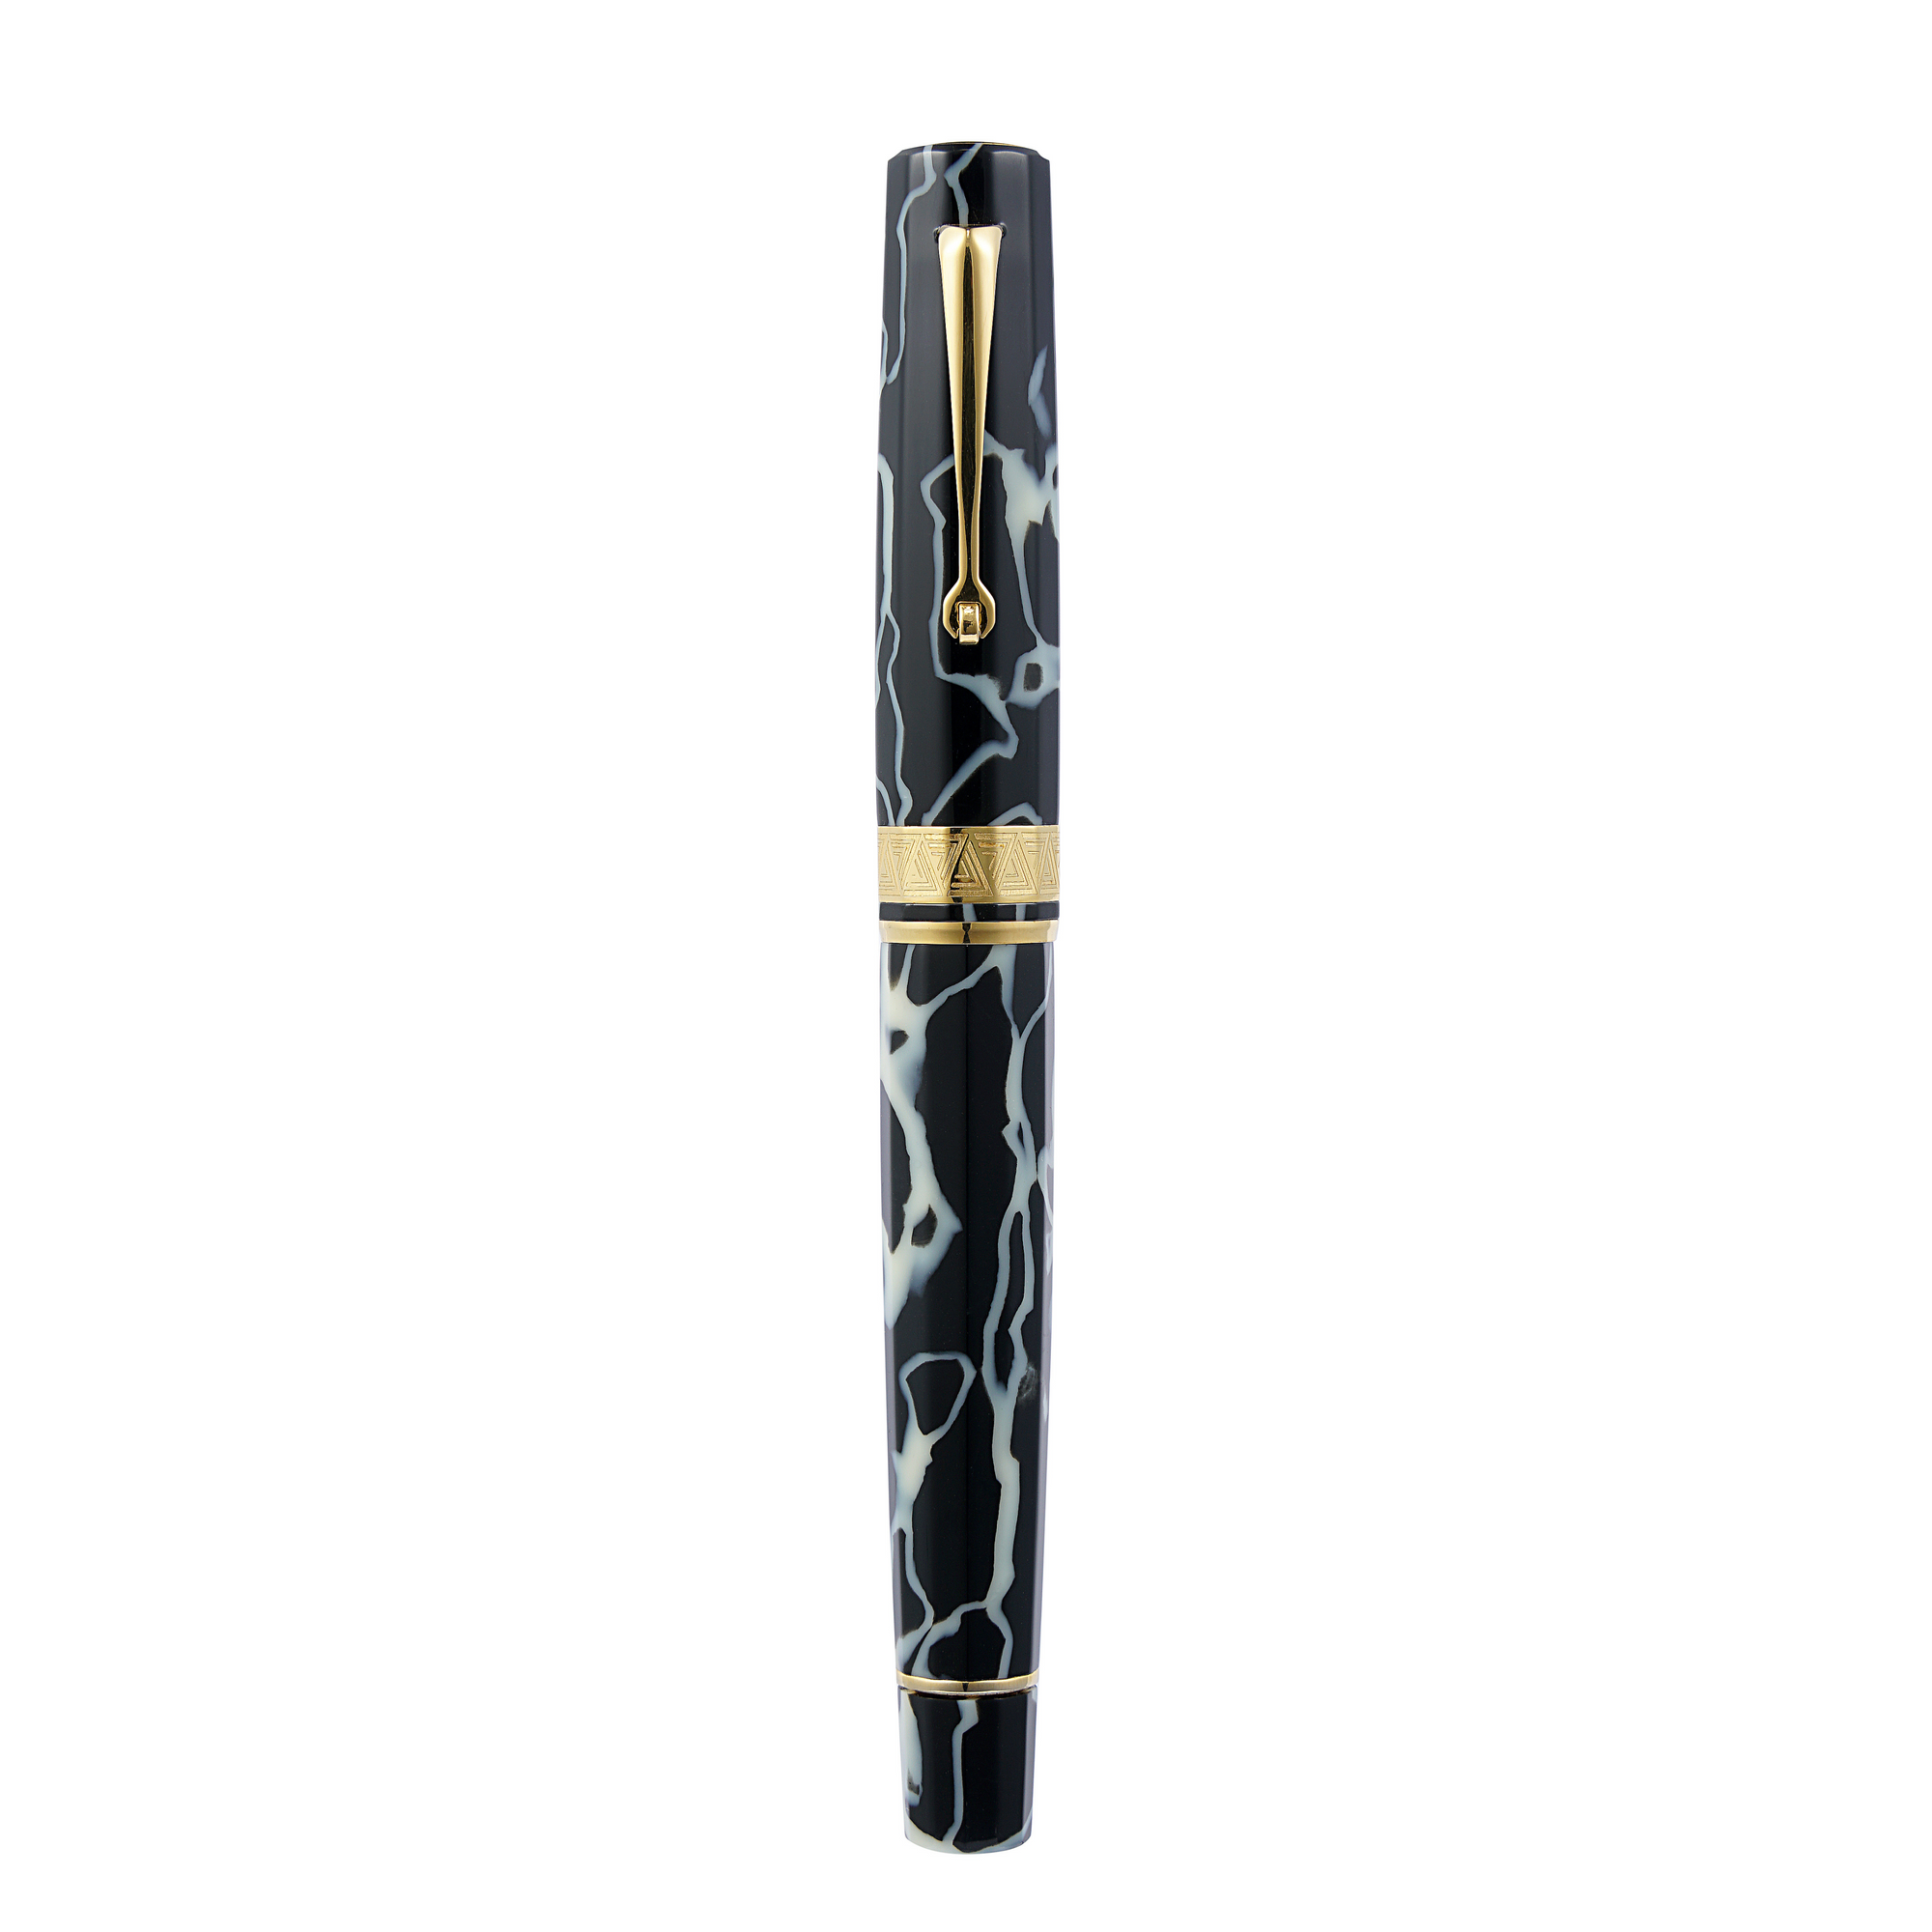 OMAS Paragon Fountain Pen in Wild with Gold Trim